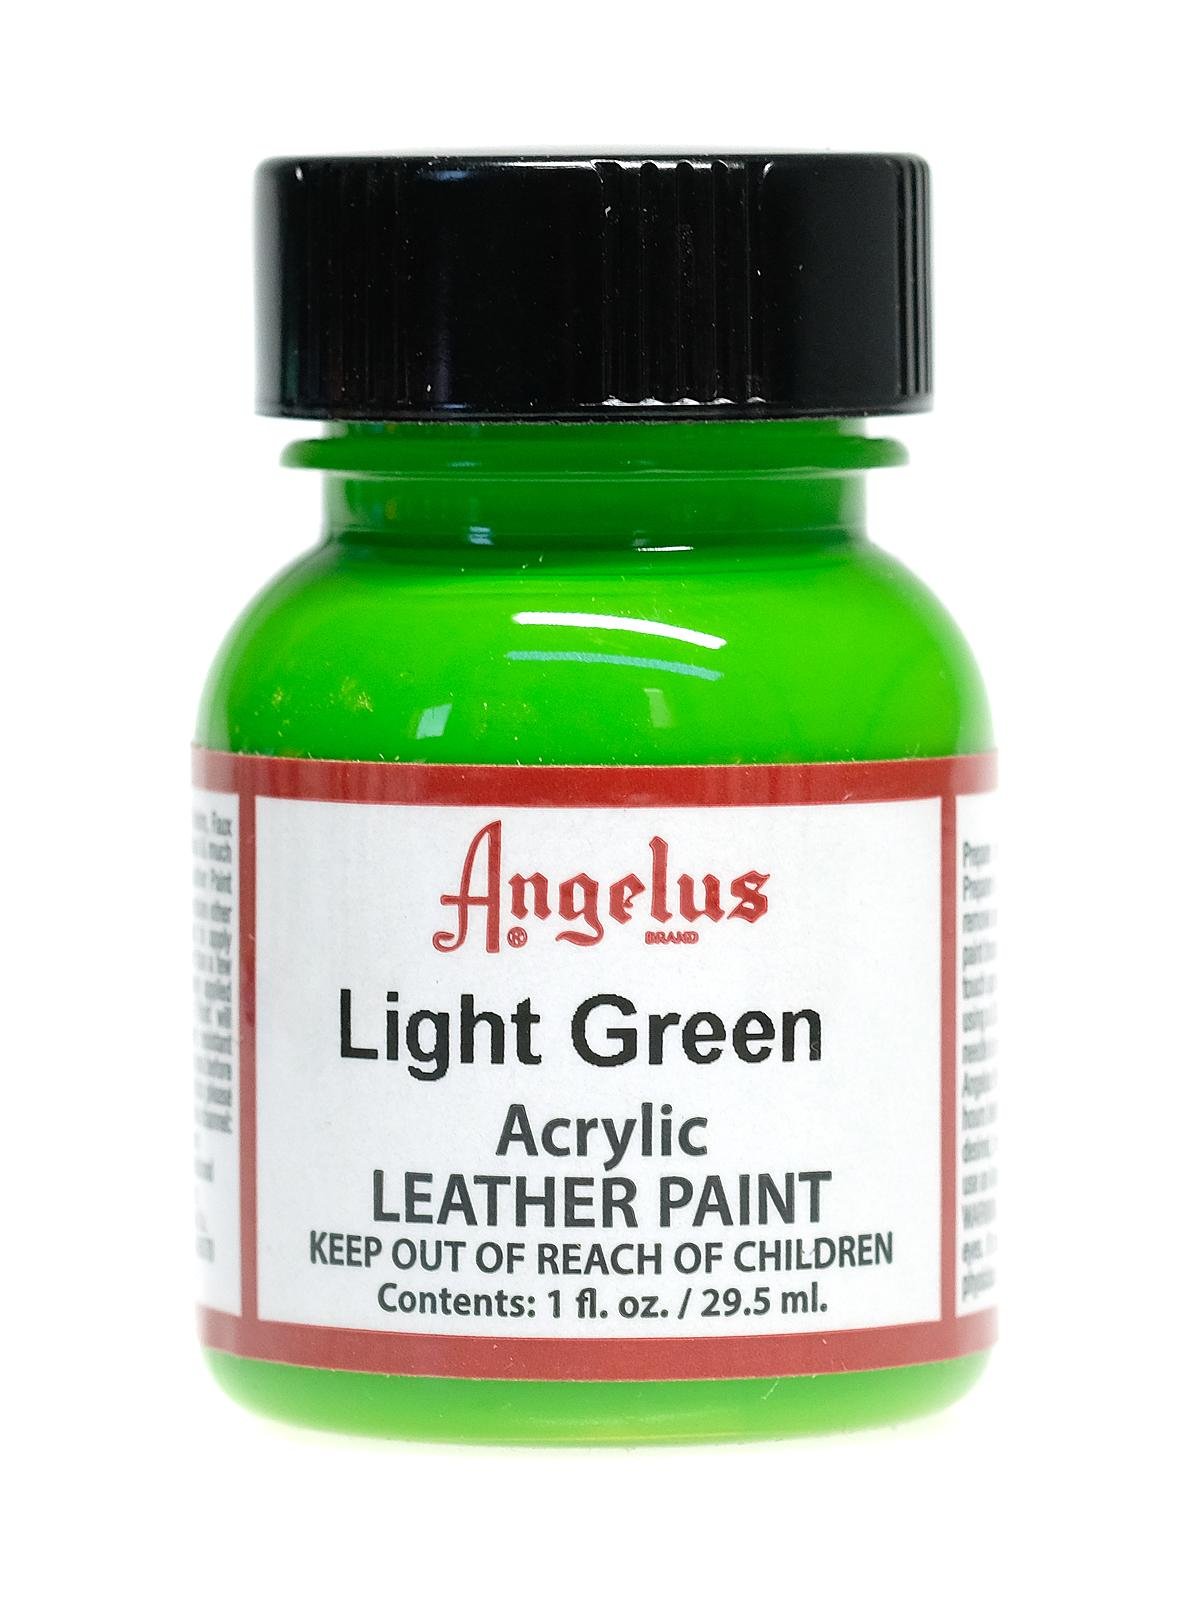 Angelus Acrylic Leather Paint 1oz Grinch Green